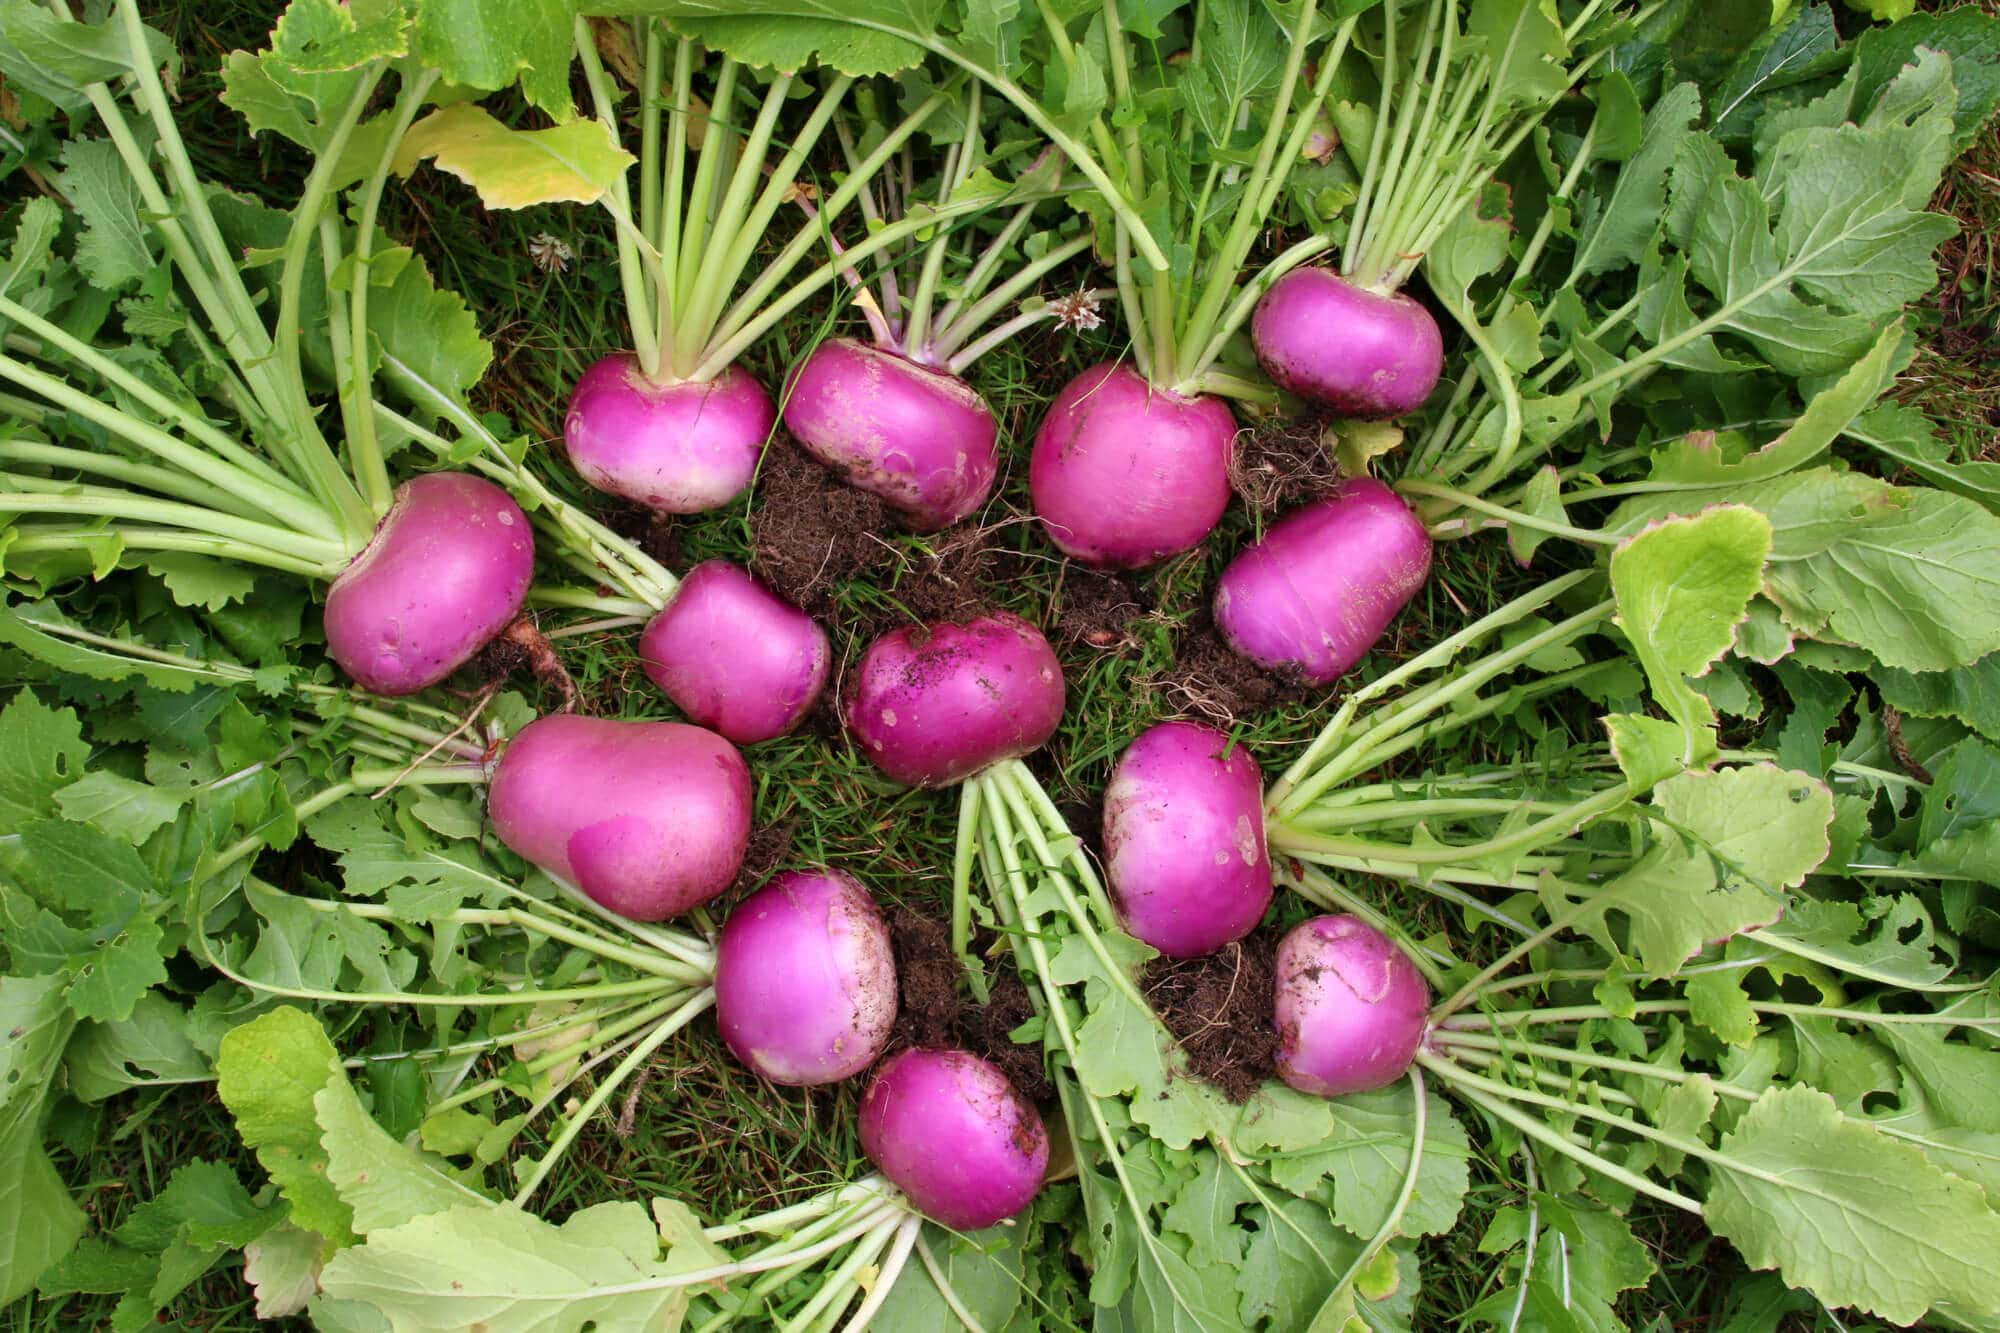 Pickled-Turnips-3